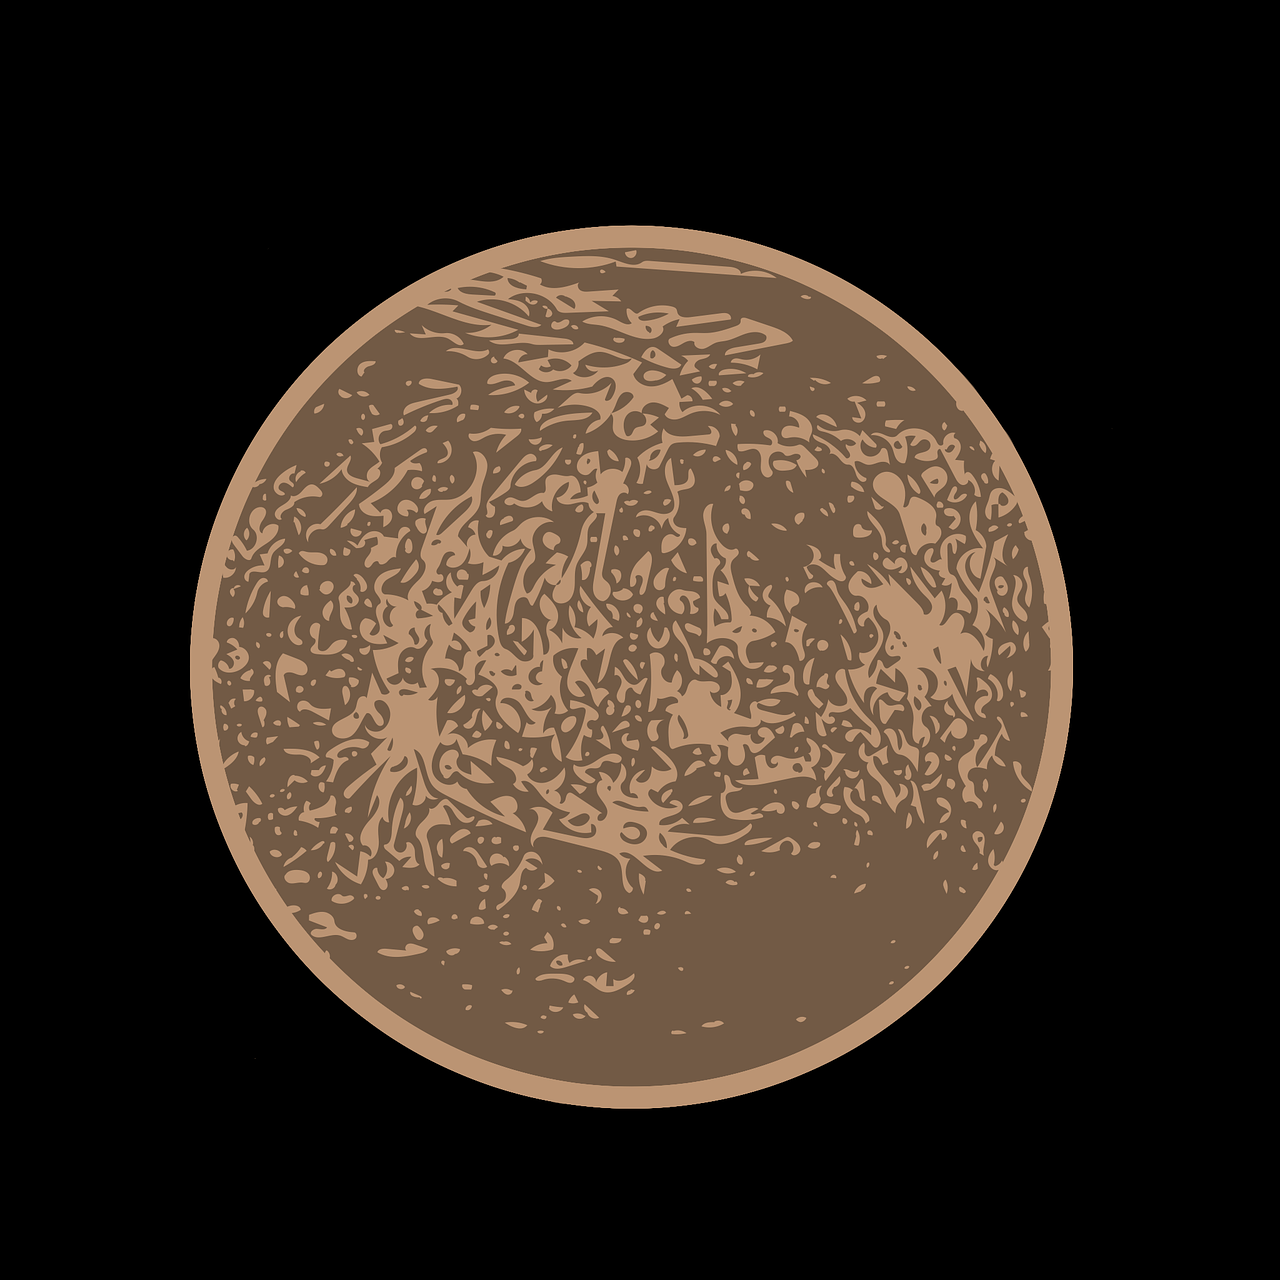 mercury planet illustration free photo